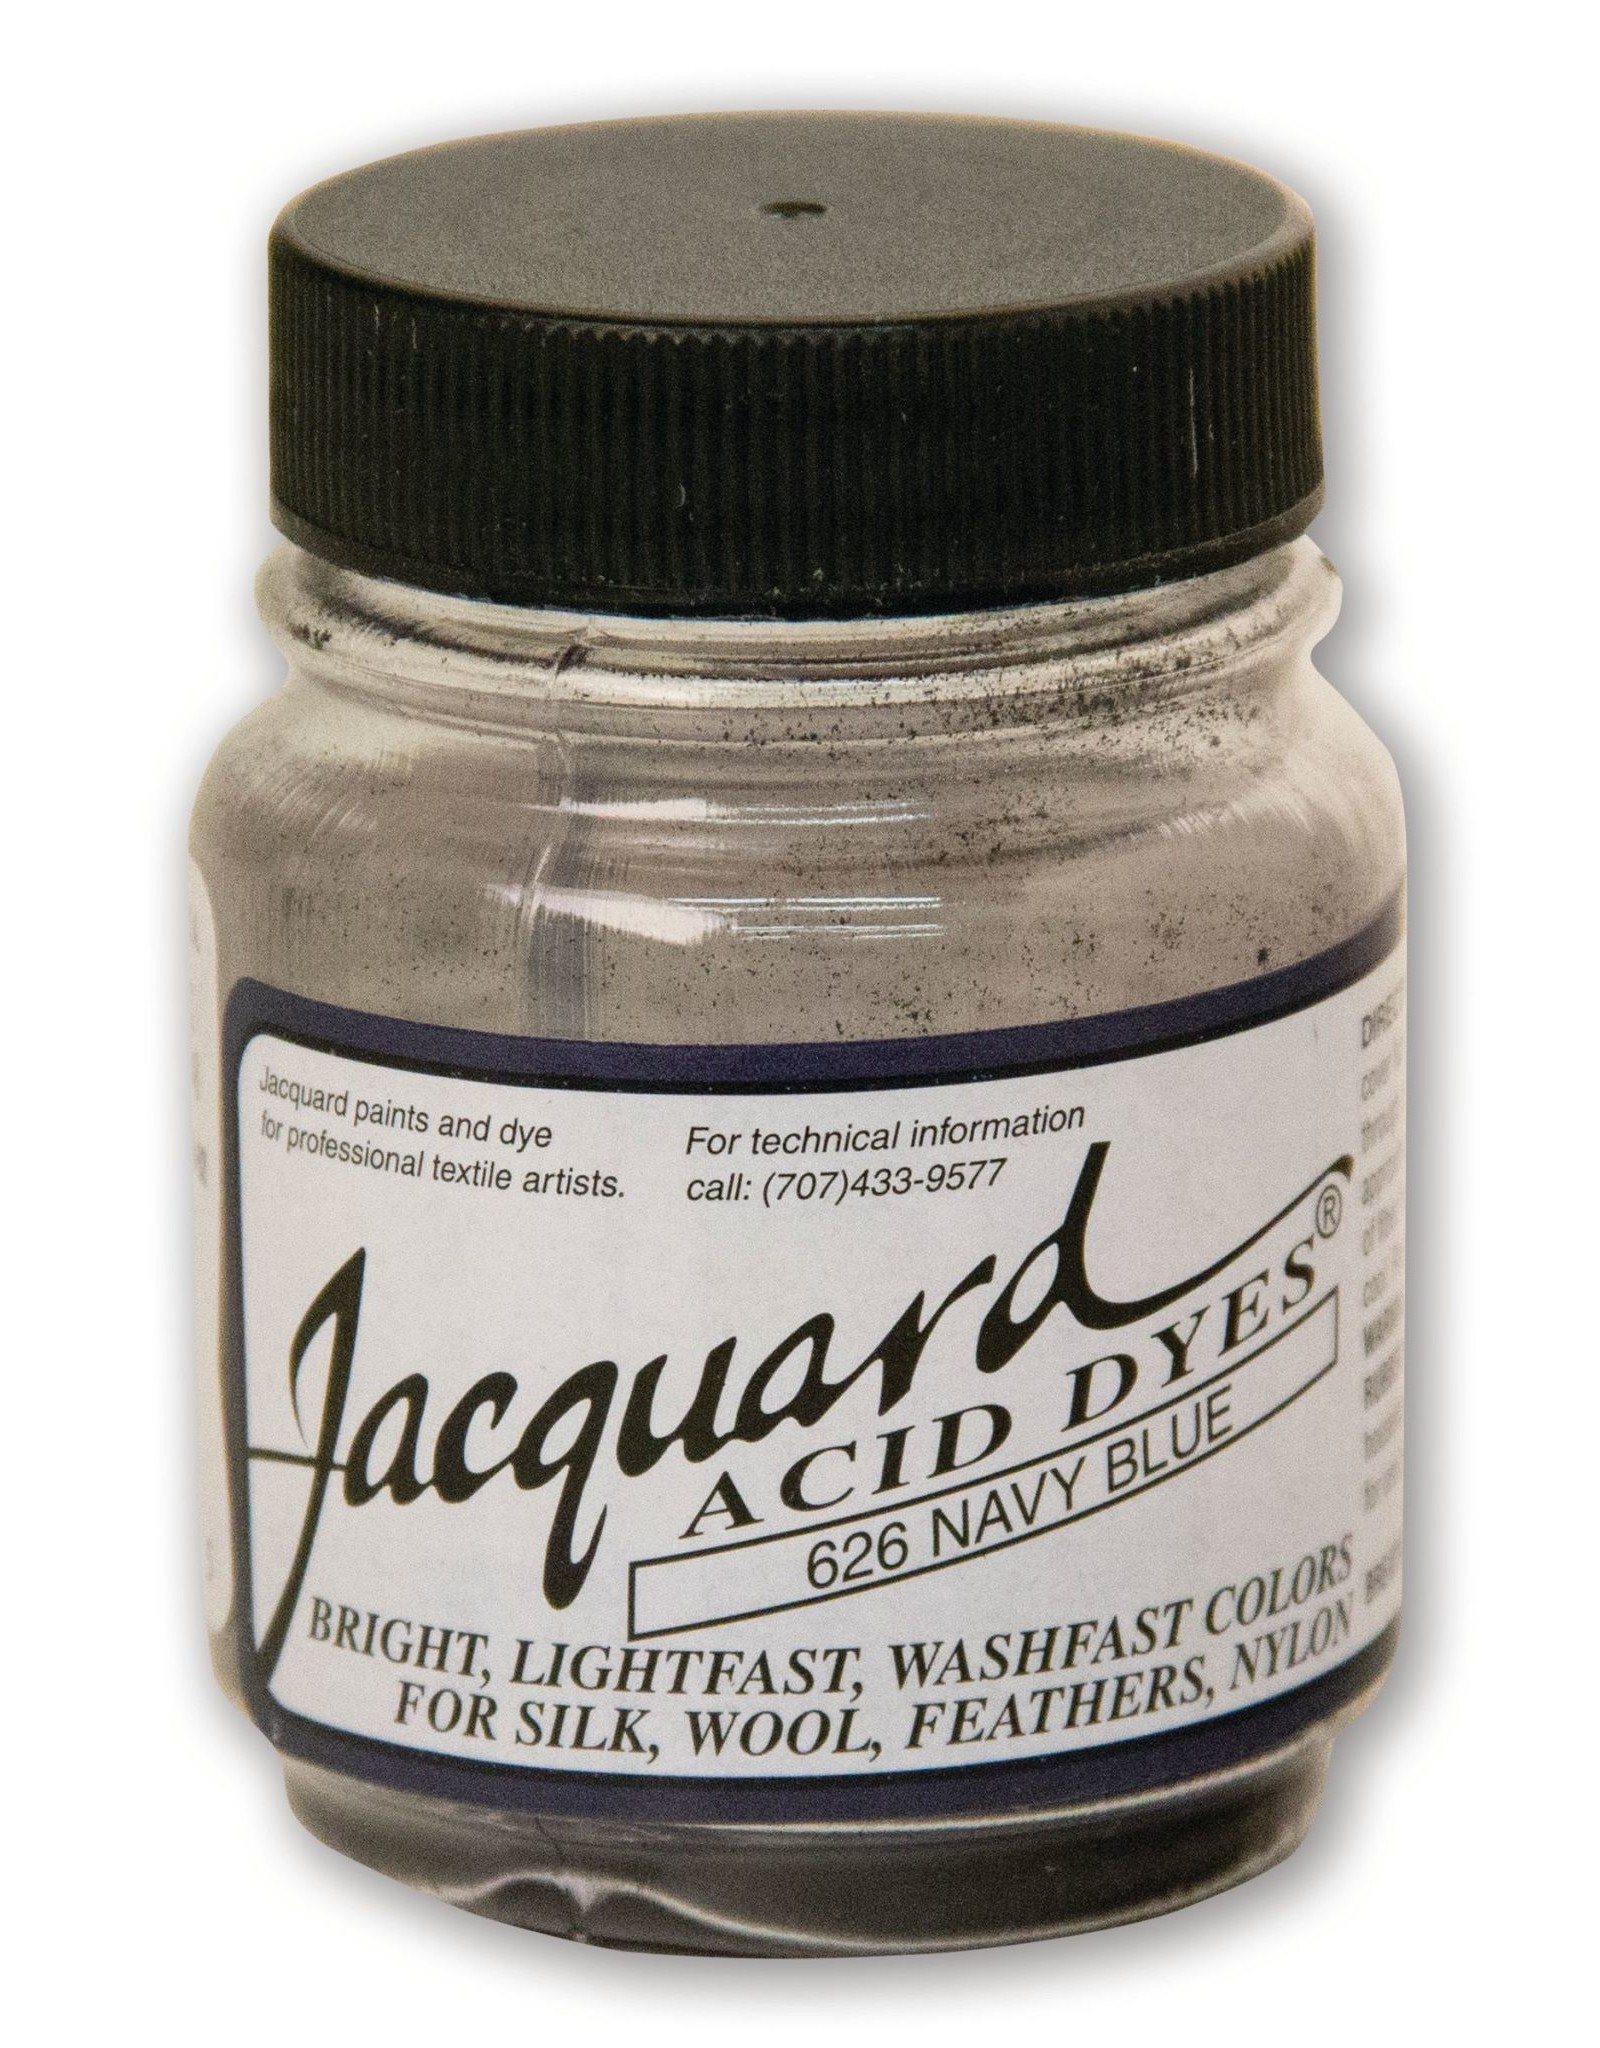 Jacquard Jacquard Acid Dye, #626 Navy Blue ½oz